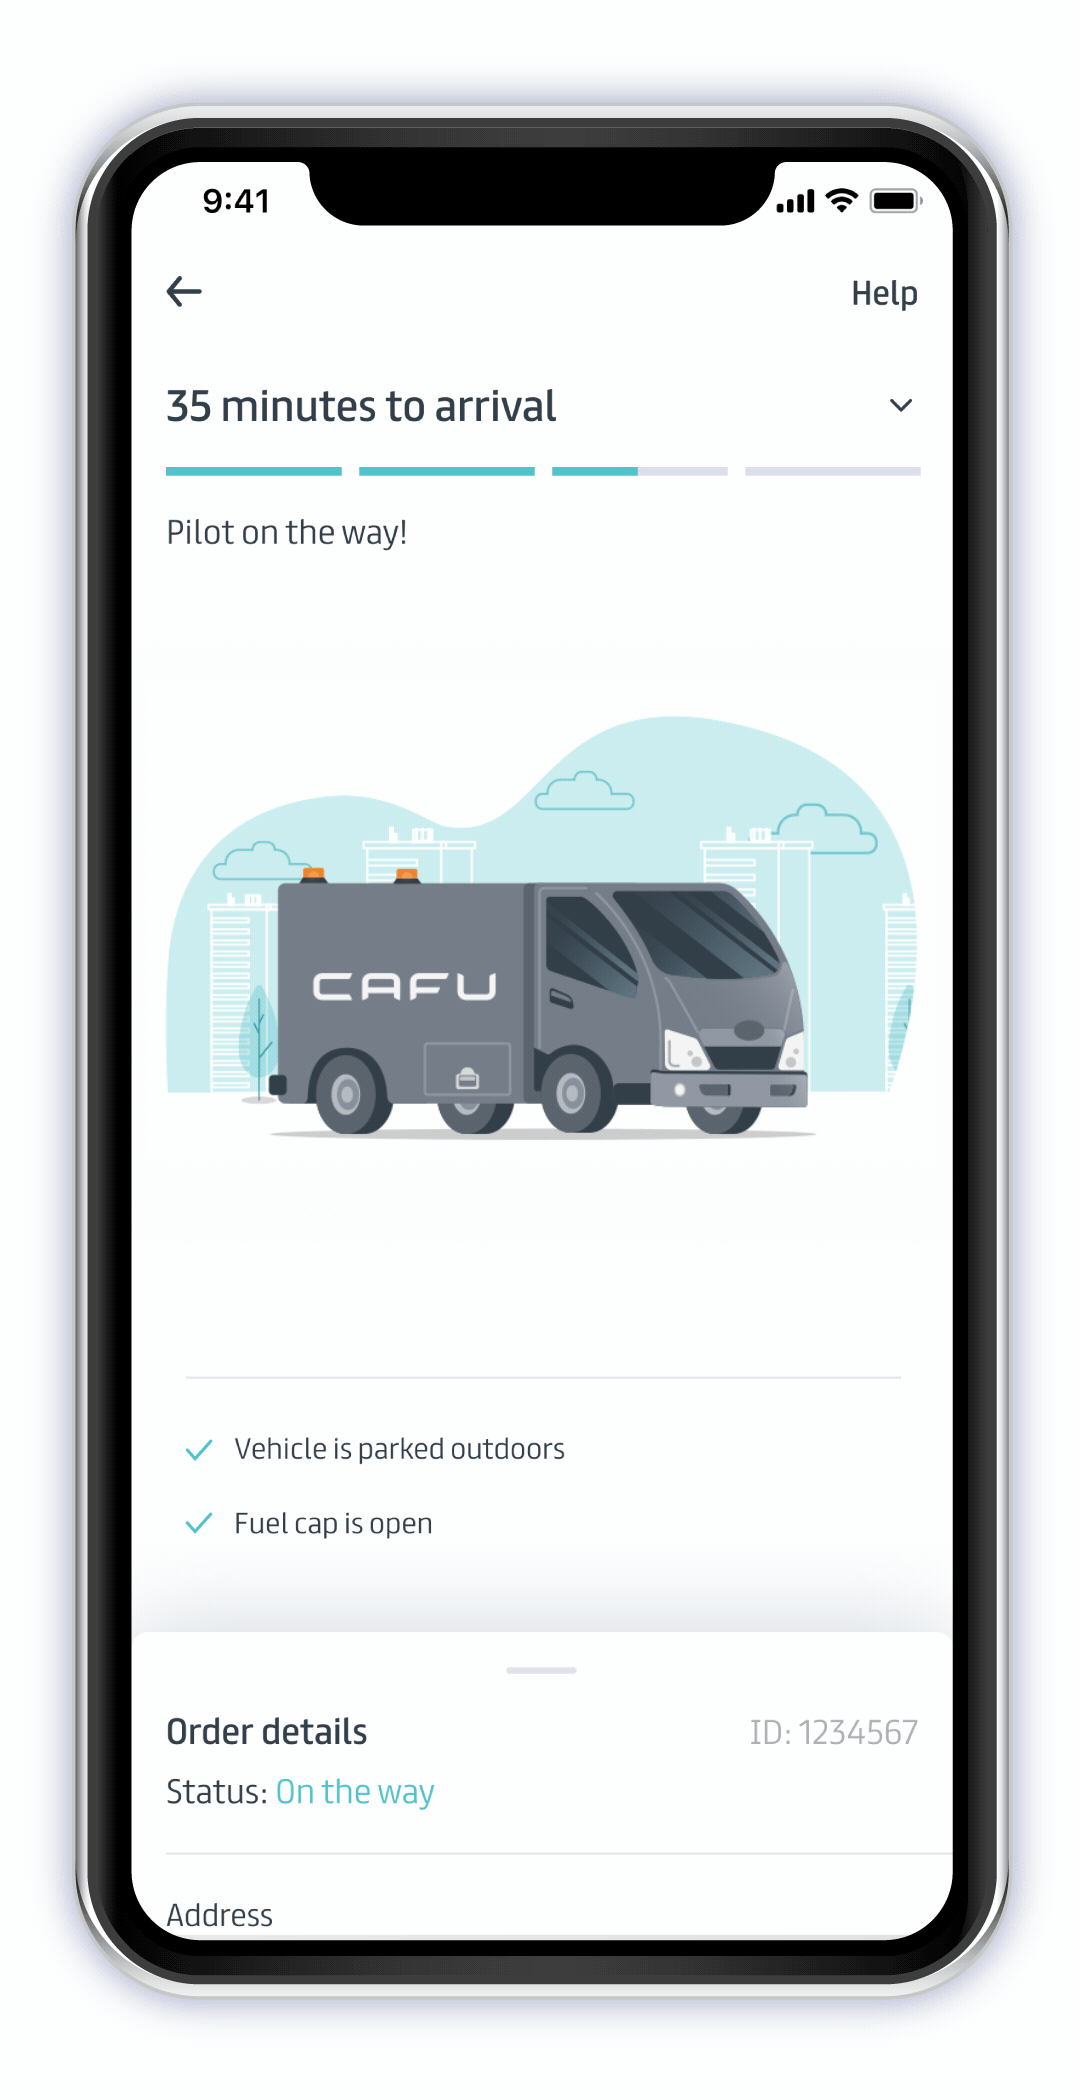 gas delivery app development